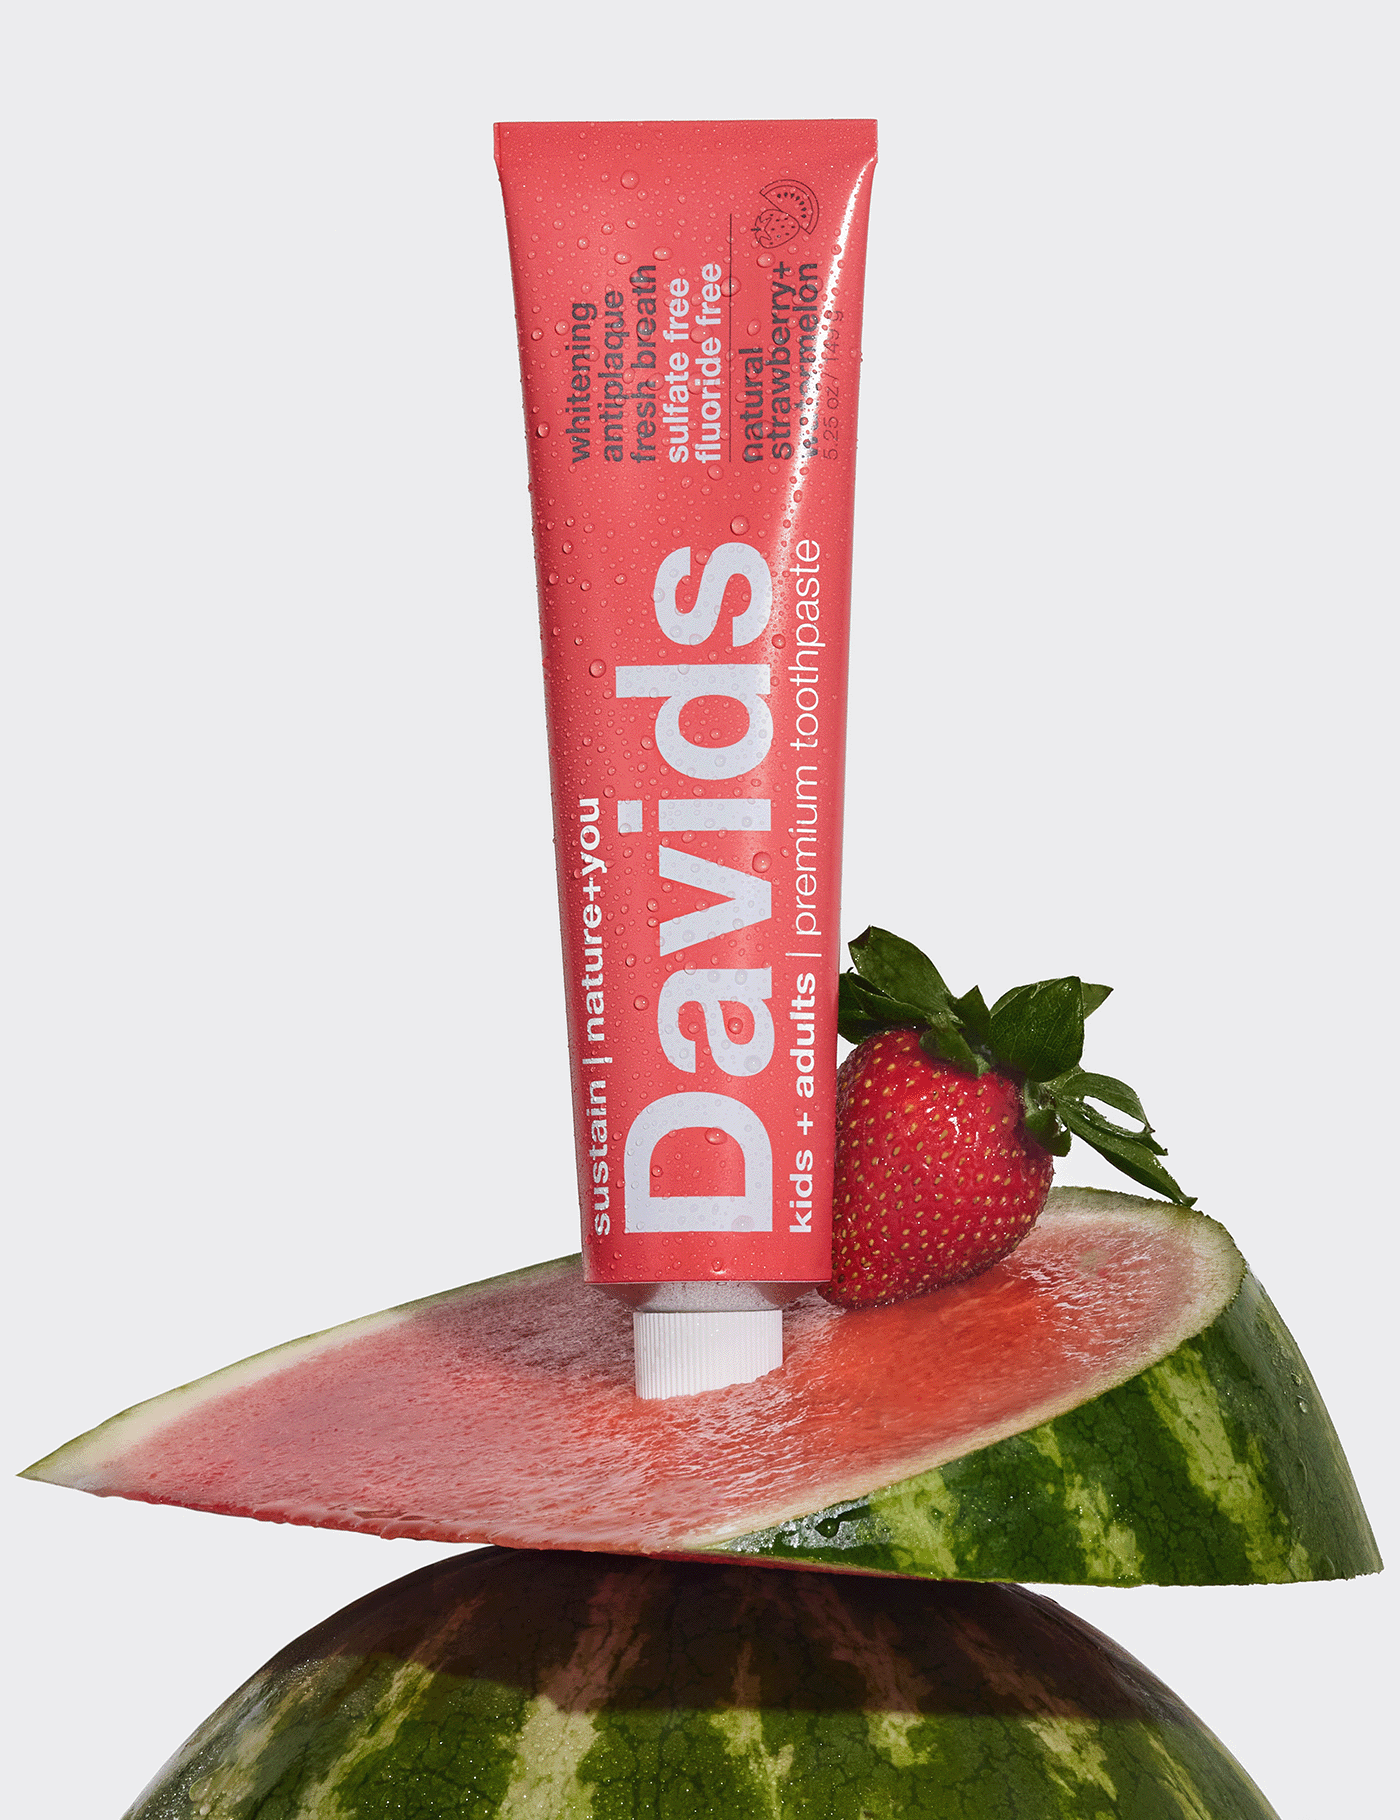 David's Kids & Adults Premium Toothpaste - Strawberry Watermelon